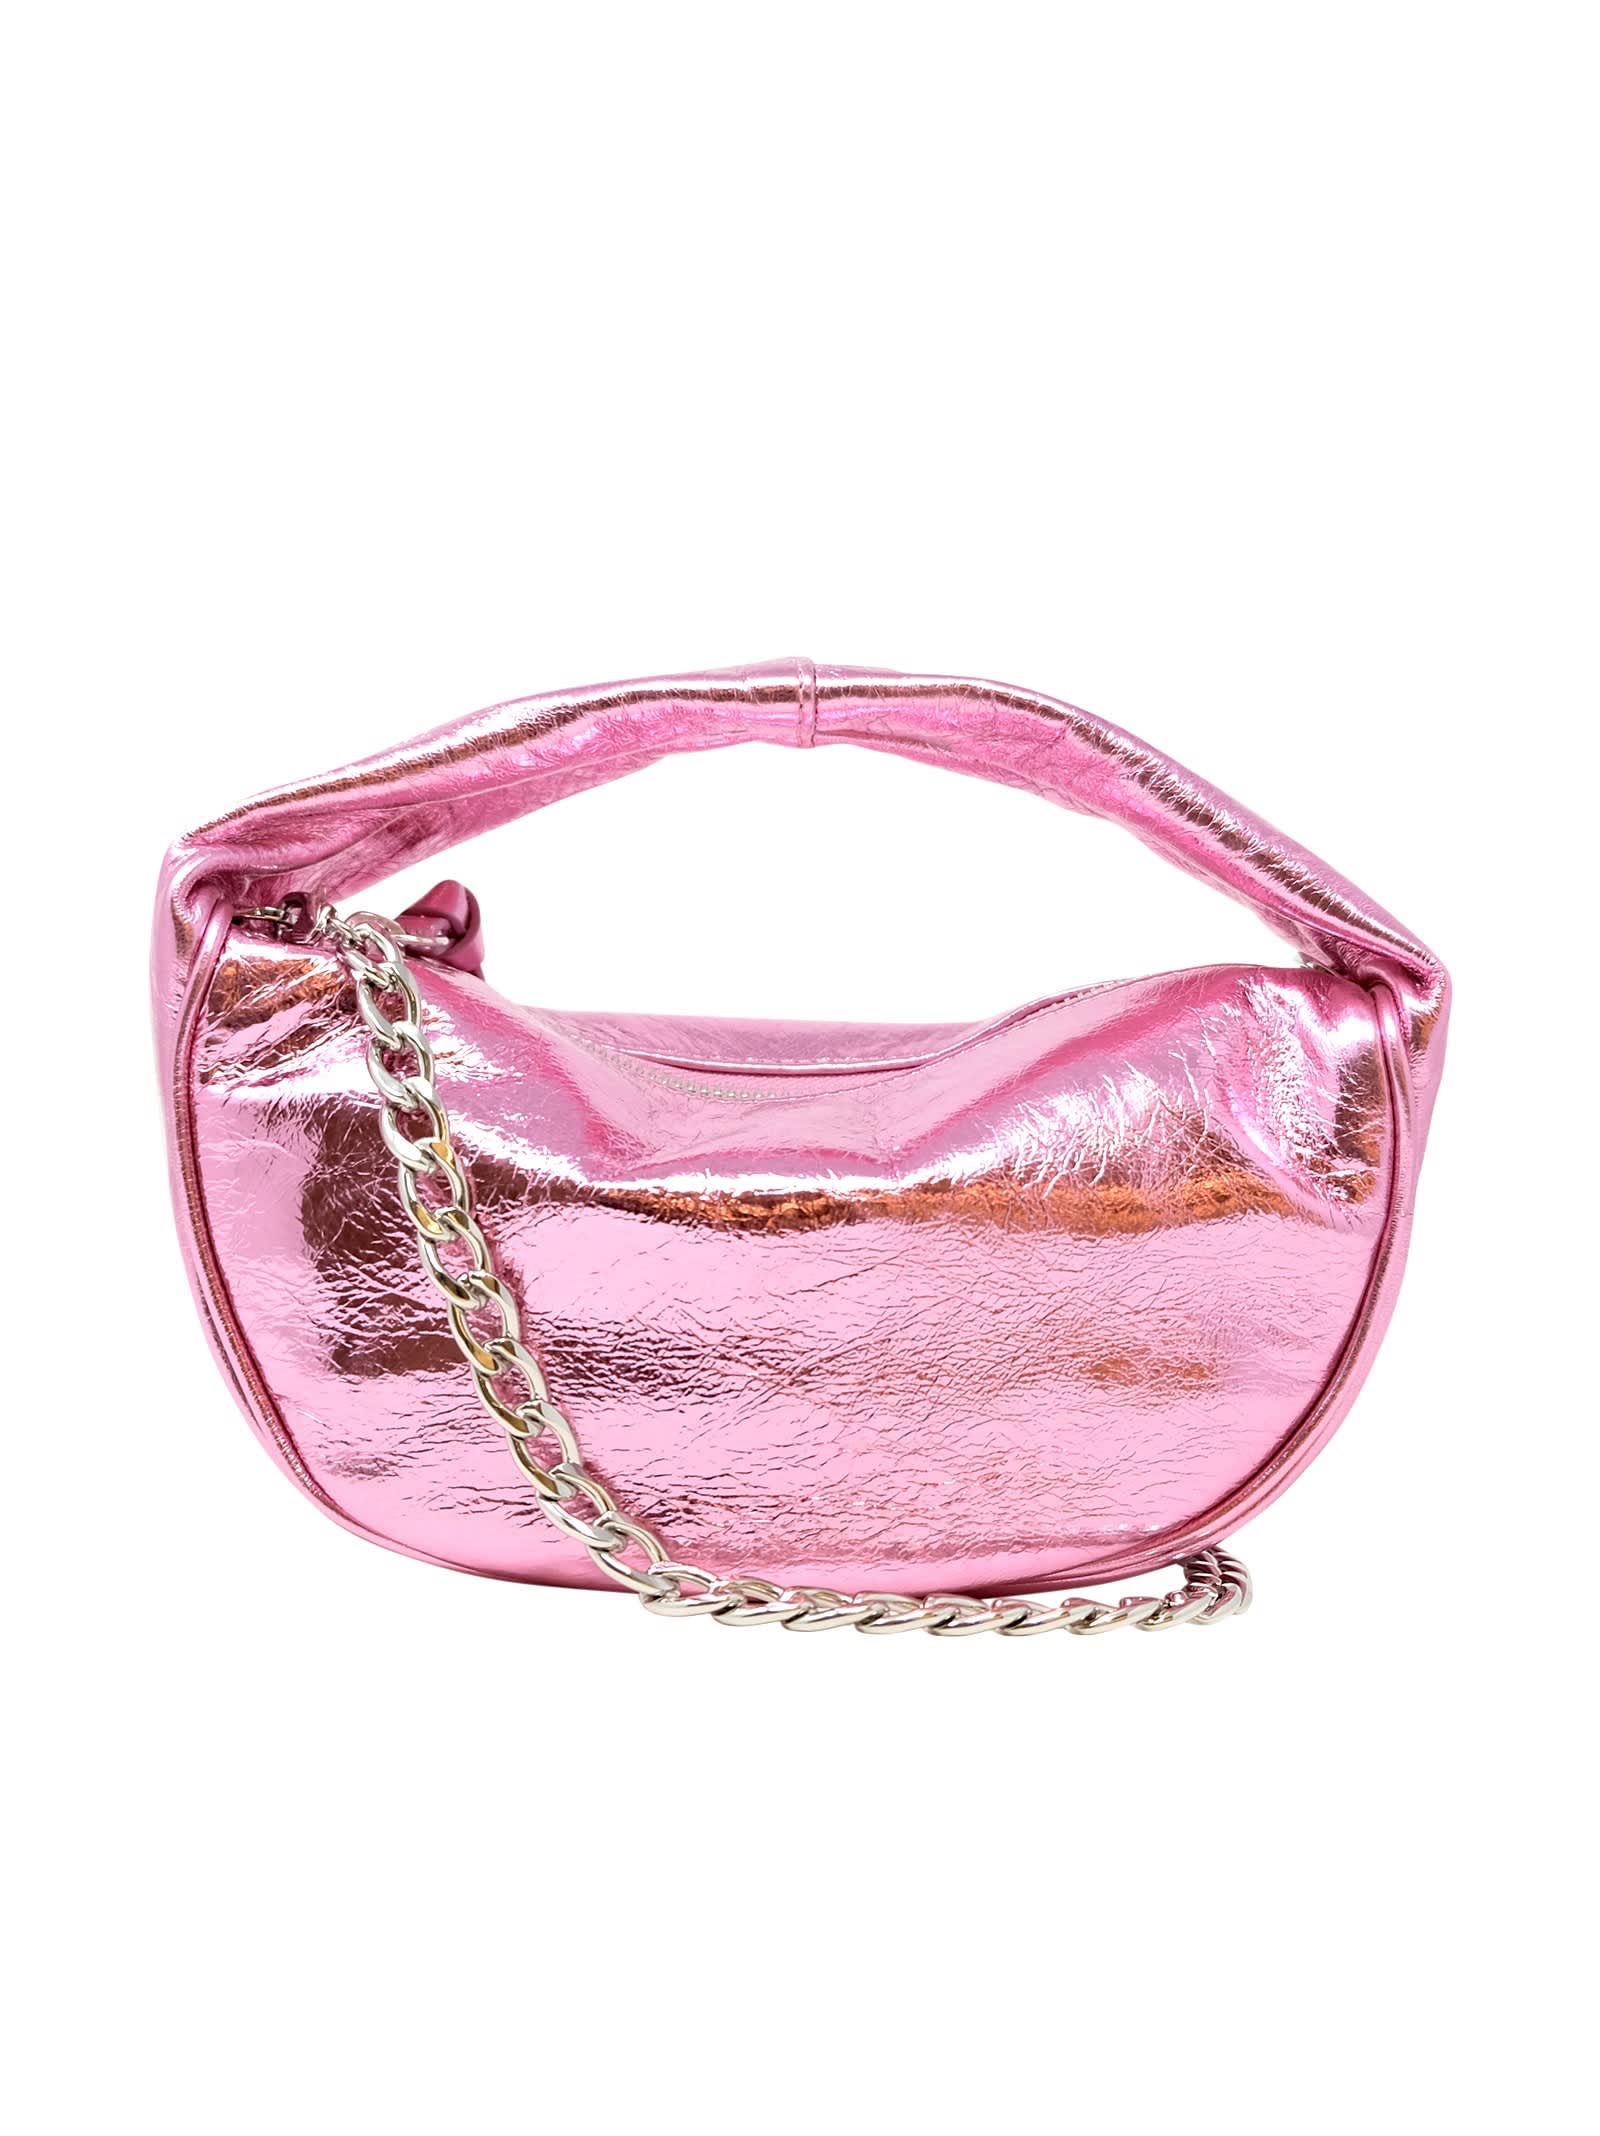 By Far Baby Cush Pink Metallic Leather Handbag